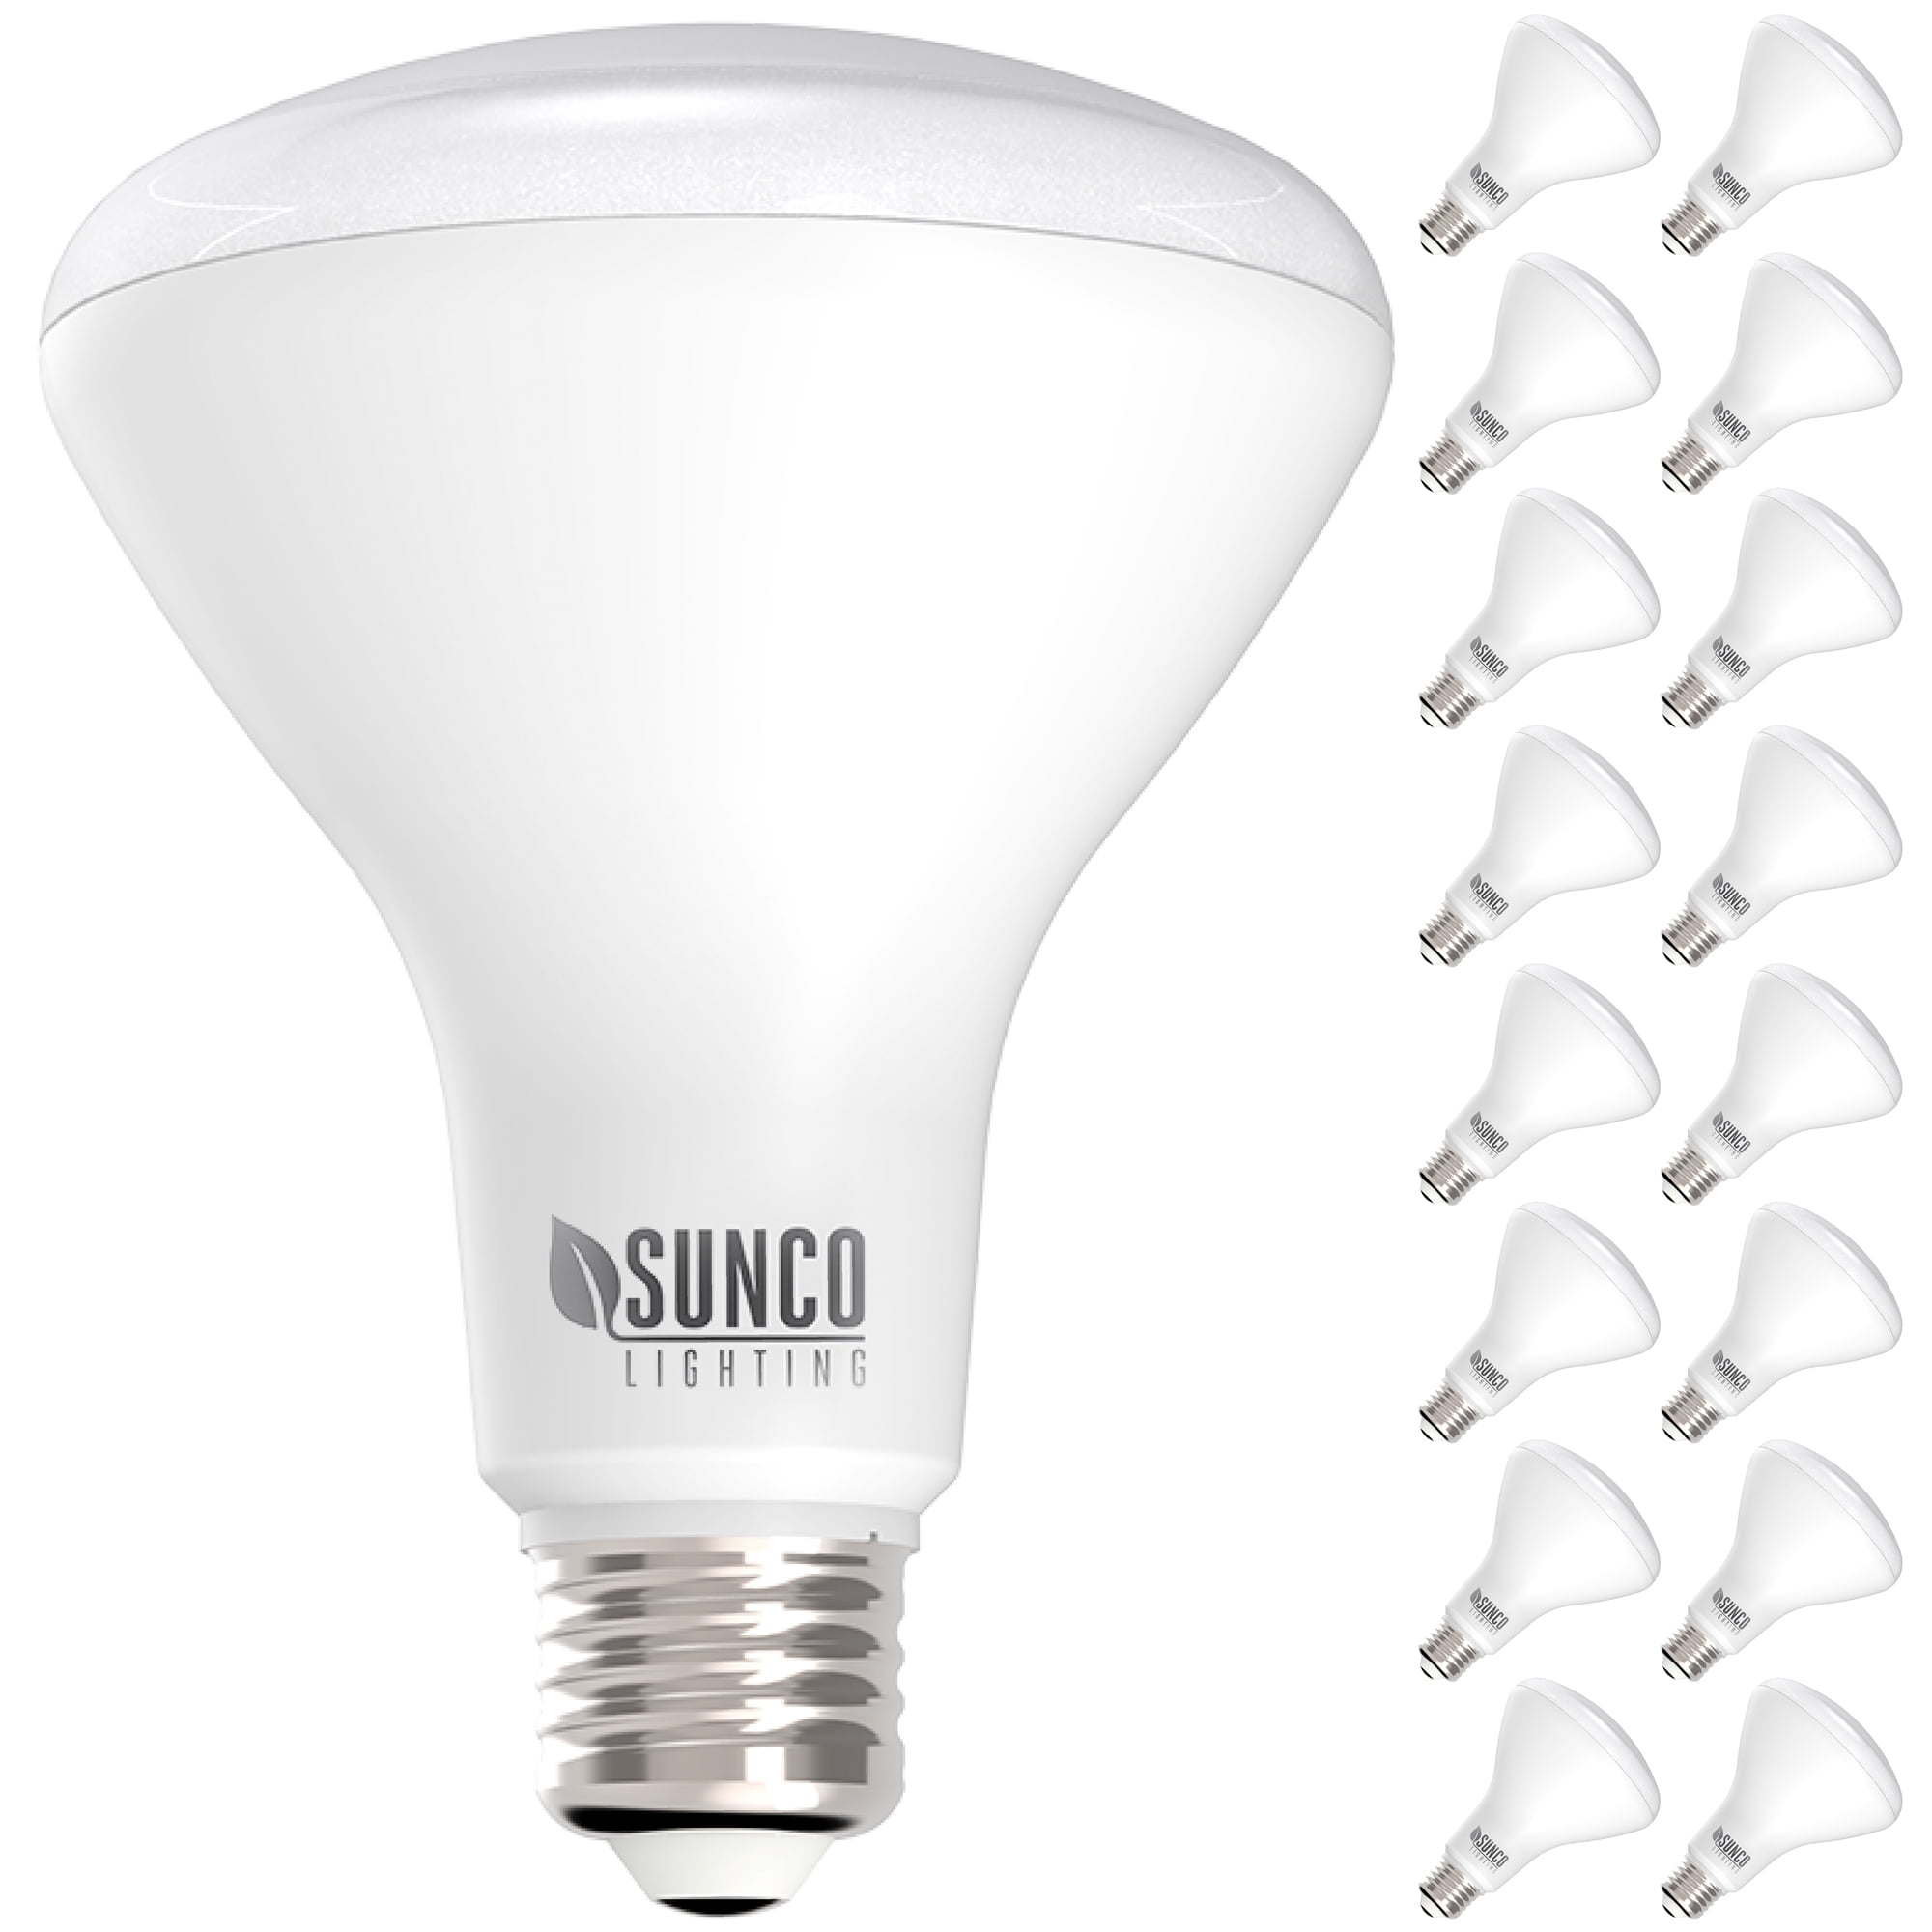 Sunco Lighting 1 Pack 5 6 Inch Smooth Recessed Retrofit Kit LED Light Fixture 